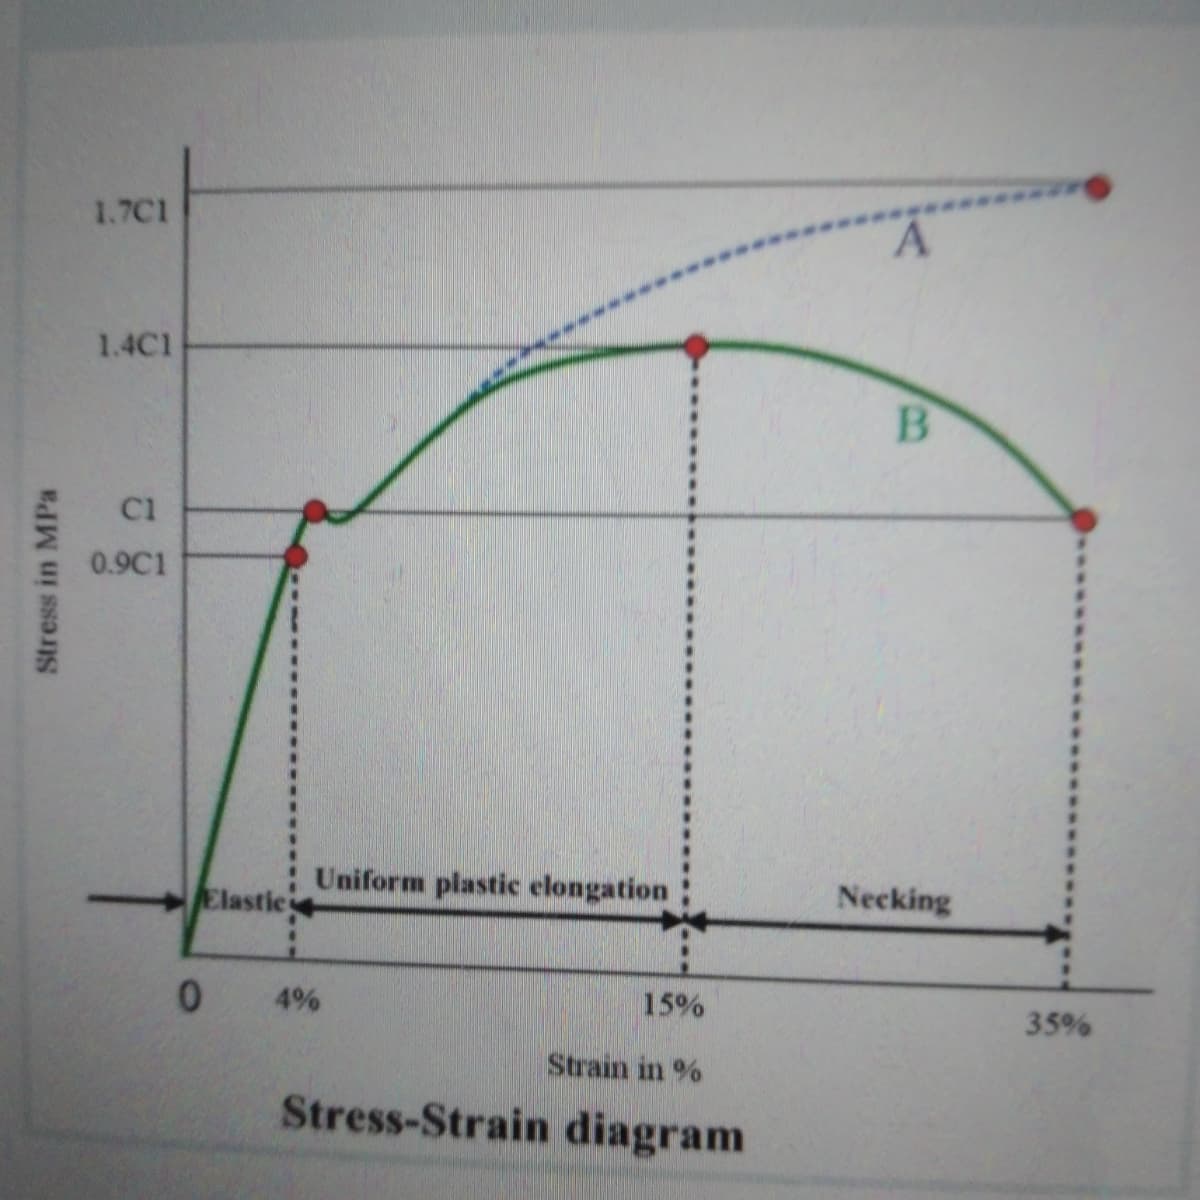 1.7C1
1.4C1
ci
0.9C1
Uniform plastic elongation
Necking
Elastie
0 4 %
15%
35%
Strain in %
Stress-Strain diagram
Stress in MPa
